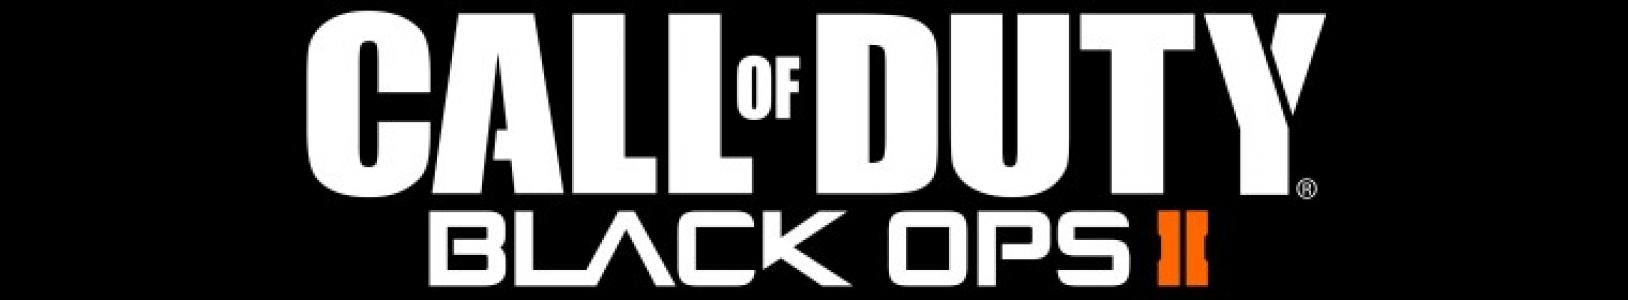 Call of Duty: Black Ops II banner